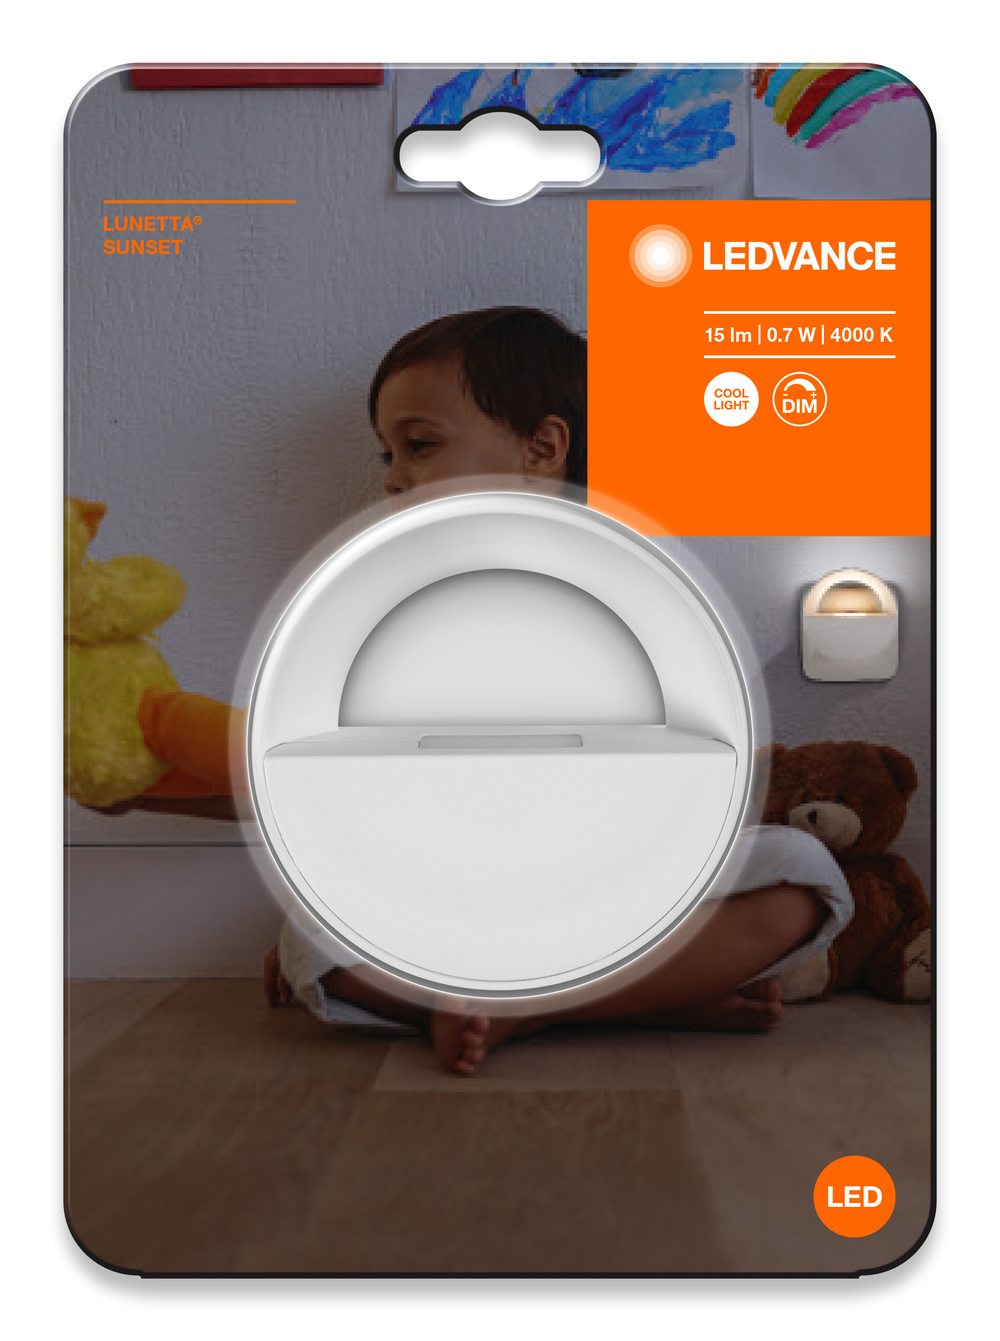 Ledvance LED socket night light with touch dimming function. LUNETTA SUNSET SUNSET – 4058075570221